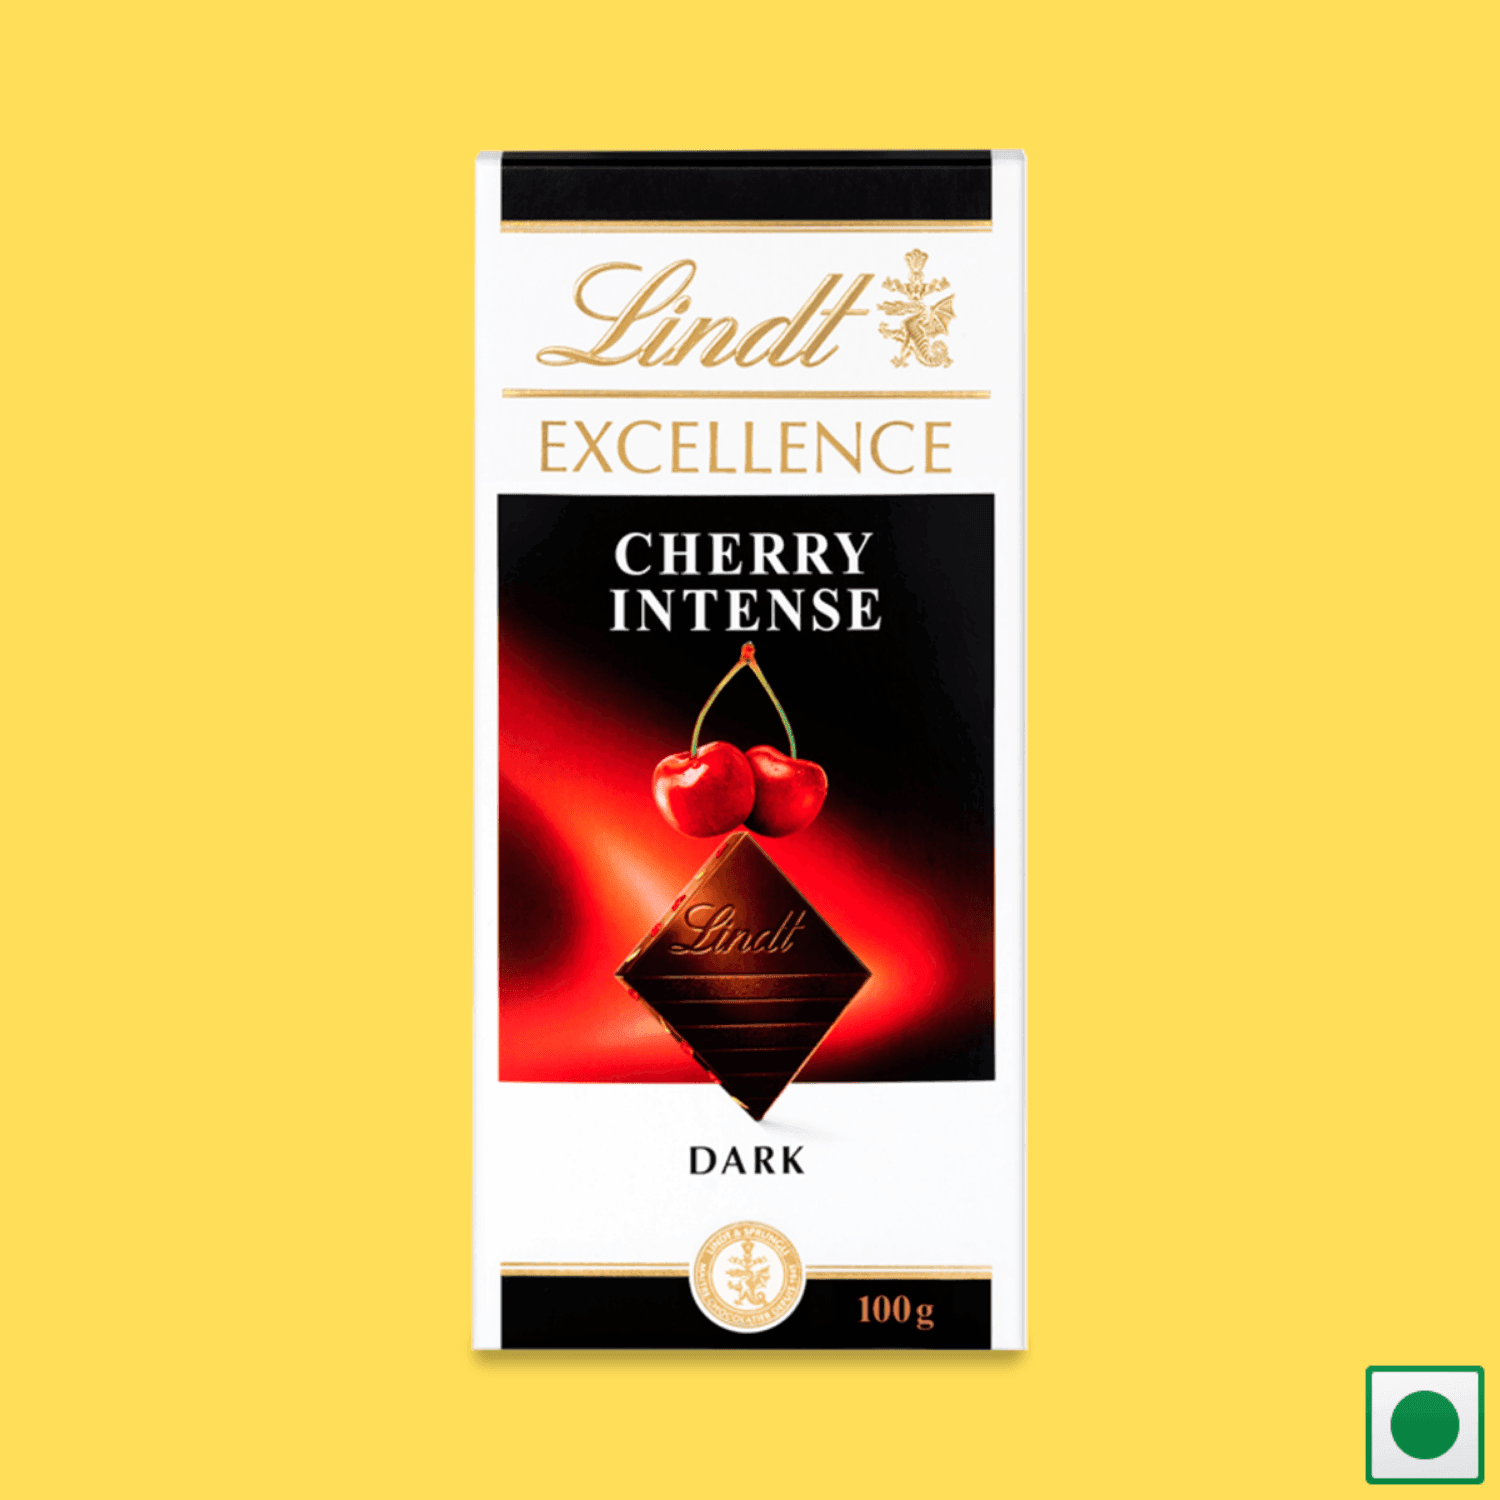 Lindt Excellence Dark Cherry Intense, 100g (Imported) - Super 7 Mart